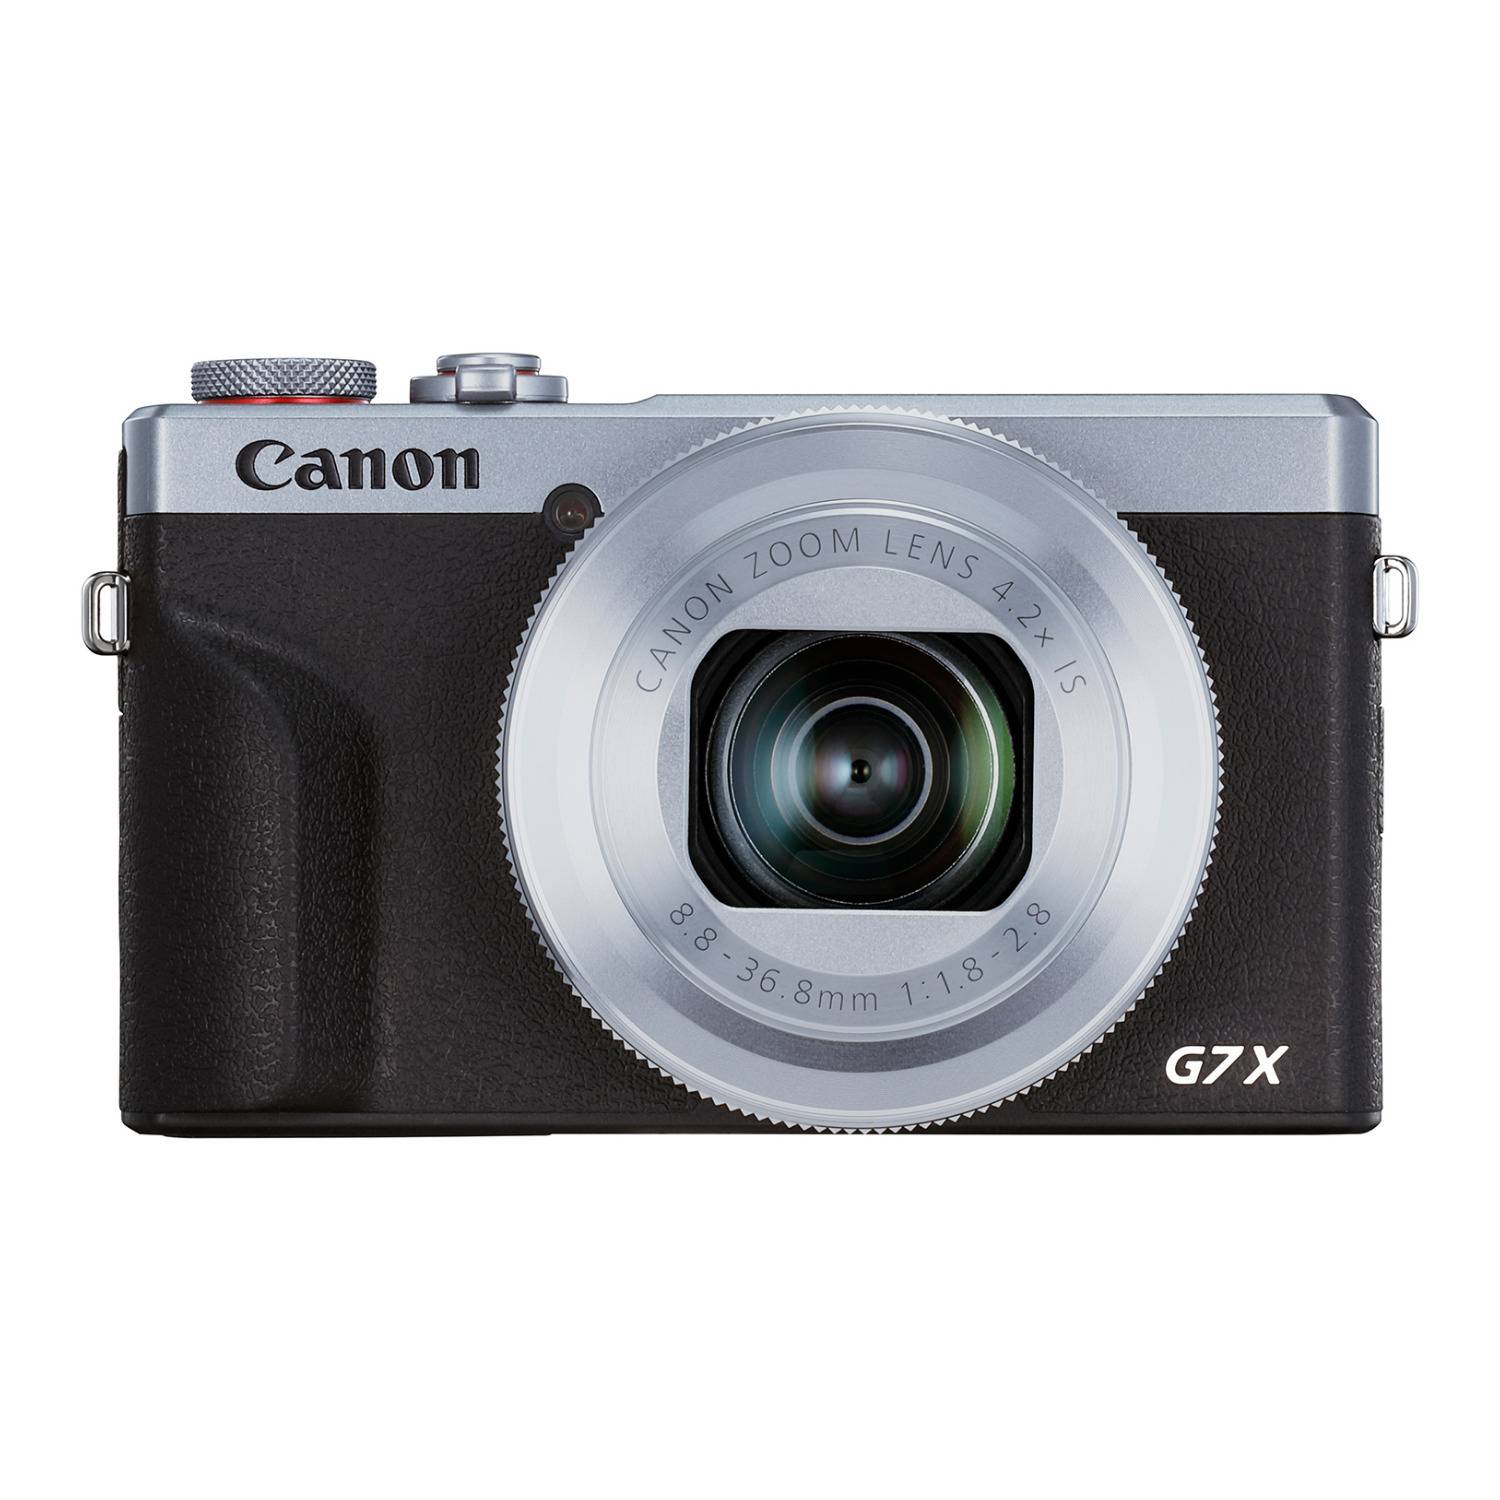 Canon PowerShot G7X Mark III Digital Camera with 4.2x Optical Zoom Lens (Silver)